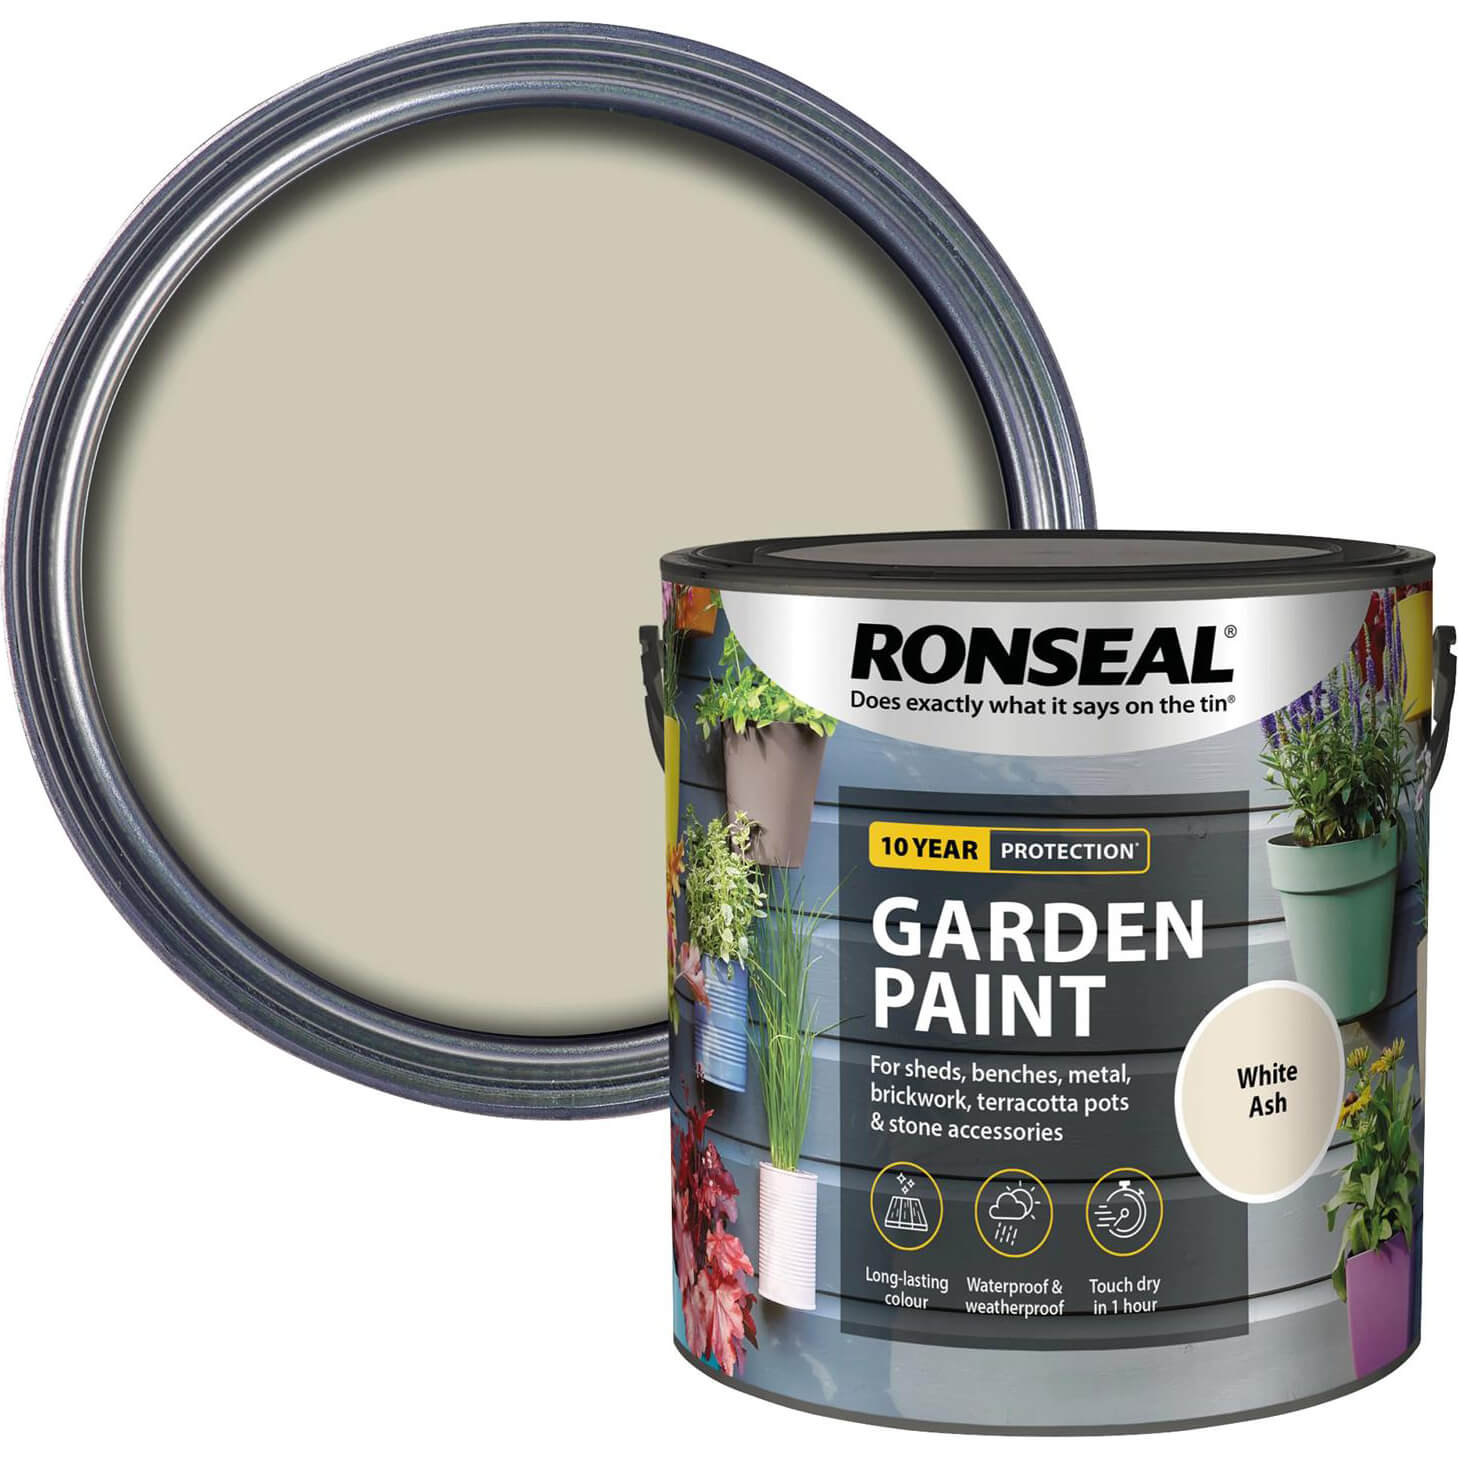 Image of Ronseal General Purpose Garden Paint White Ash 2.5l